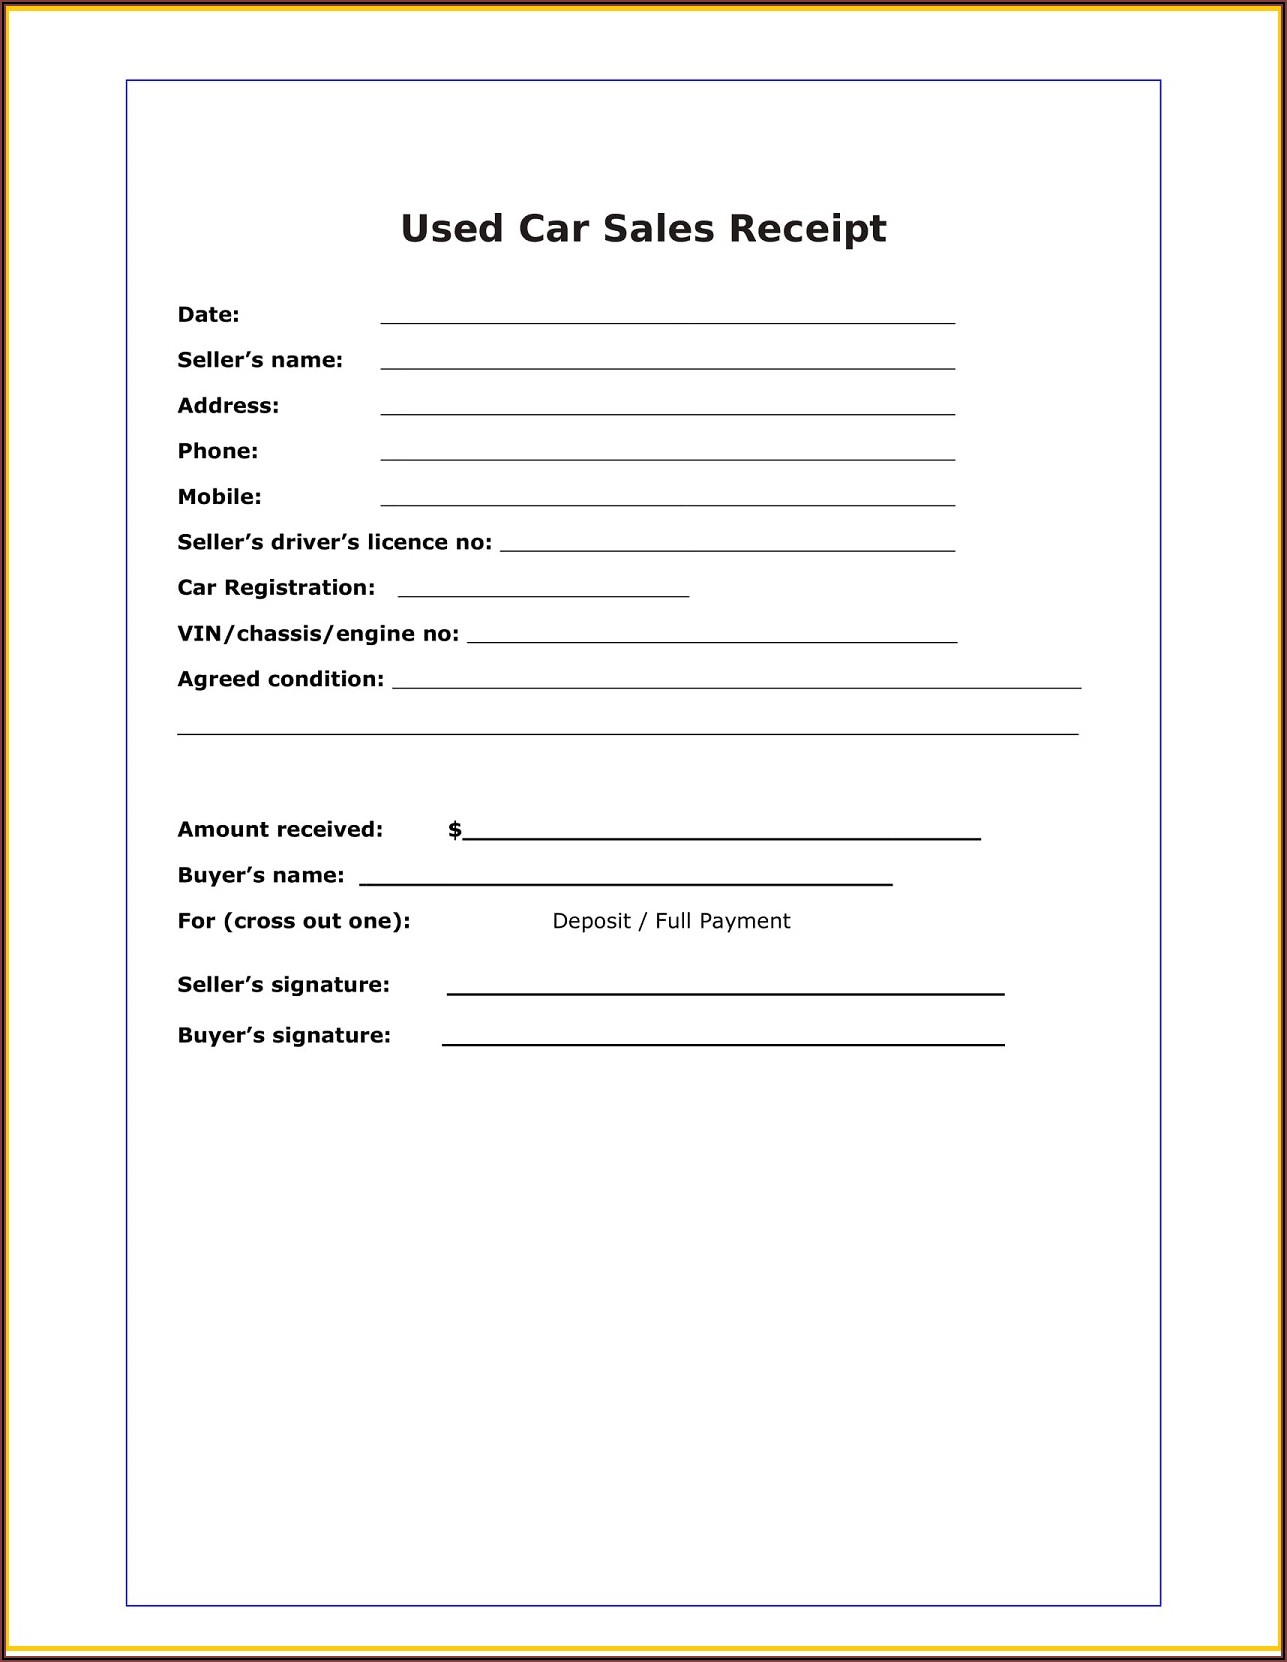 Used Car Sales Receipt Form